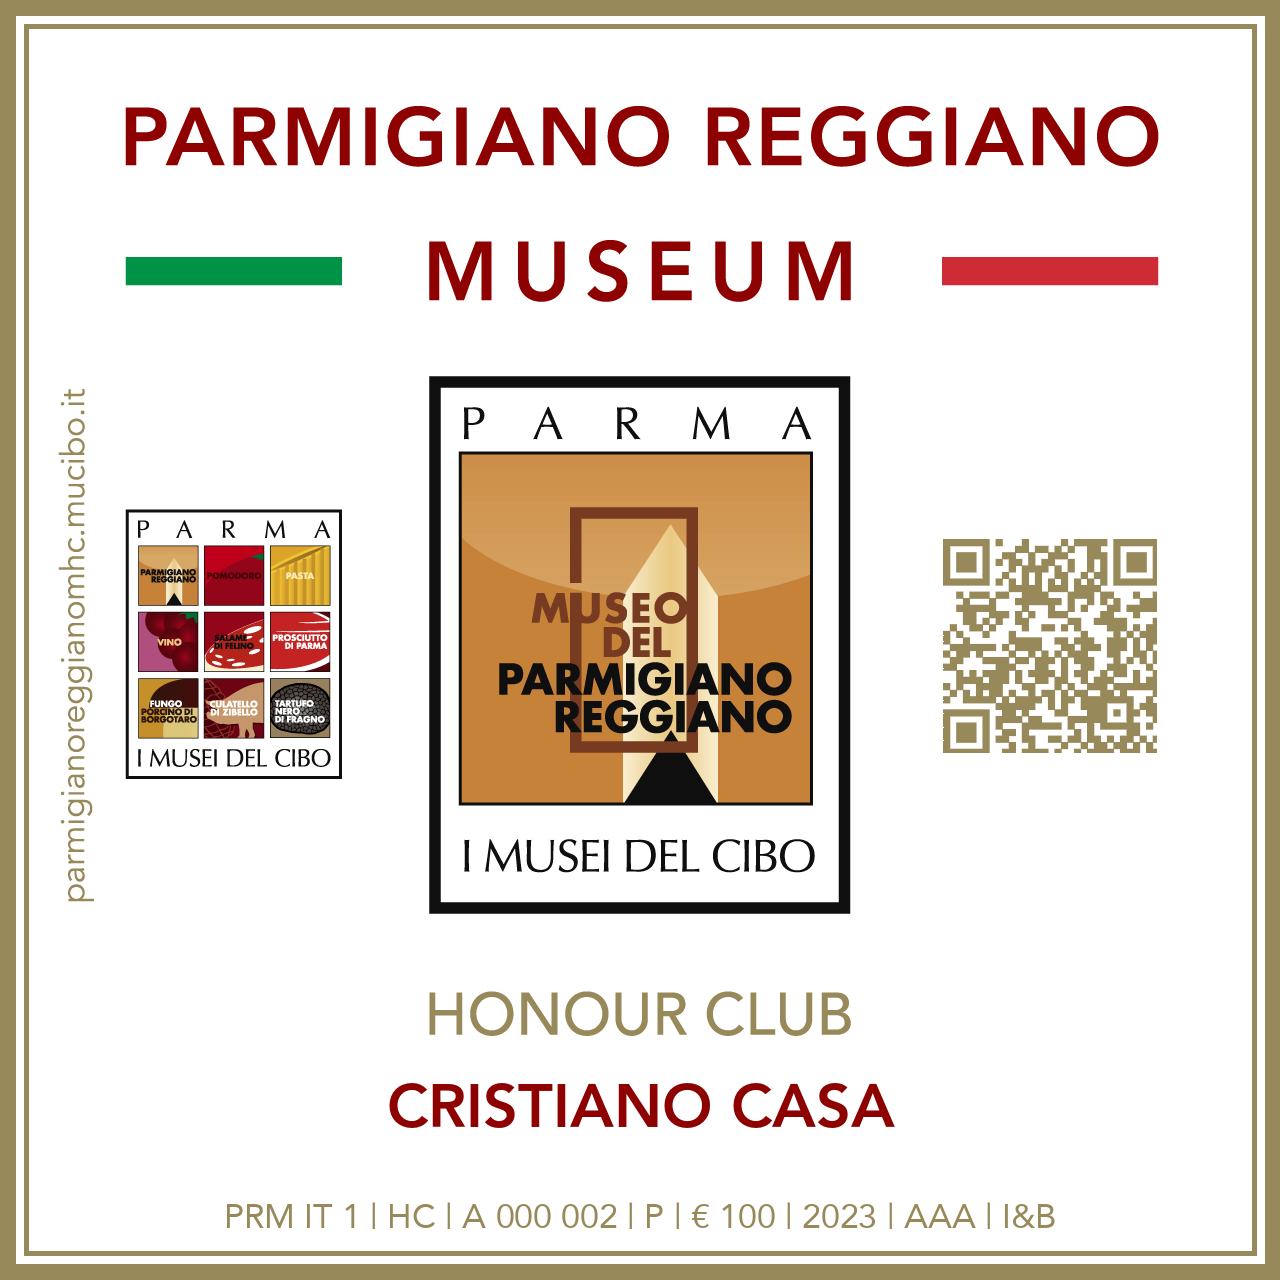 Parmigiano Reggiano Museum Honour Club - Token Id A 000 002 - CRISTIANO CASA